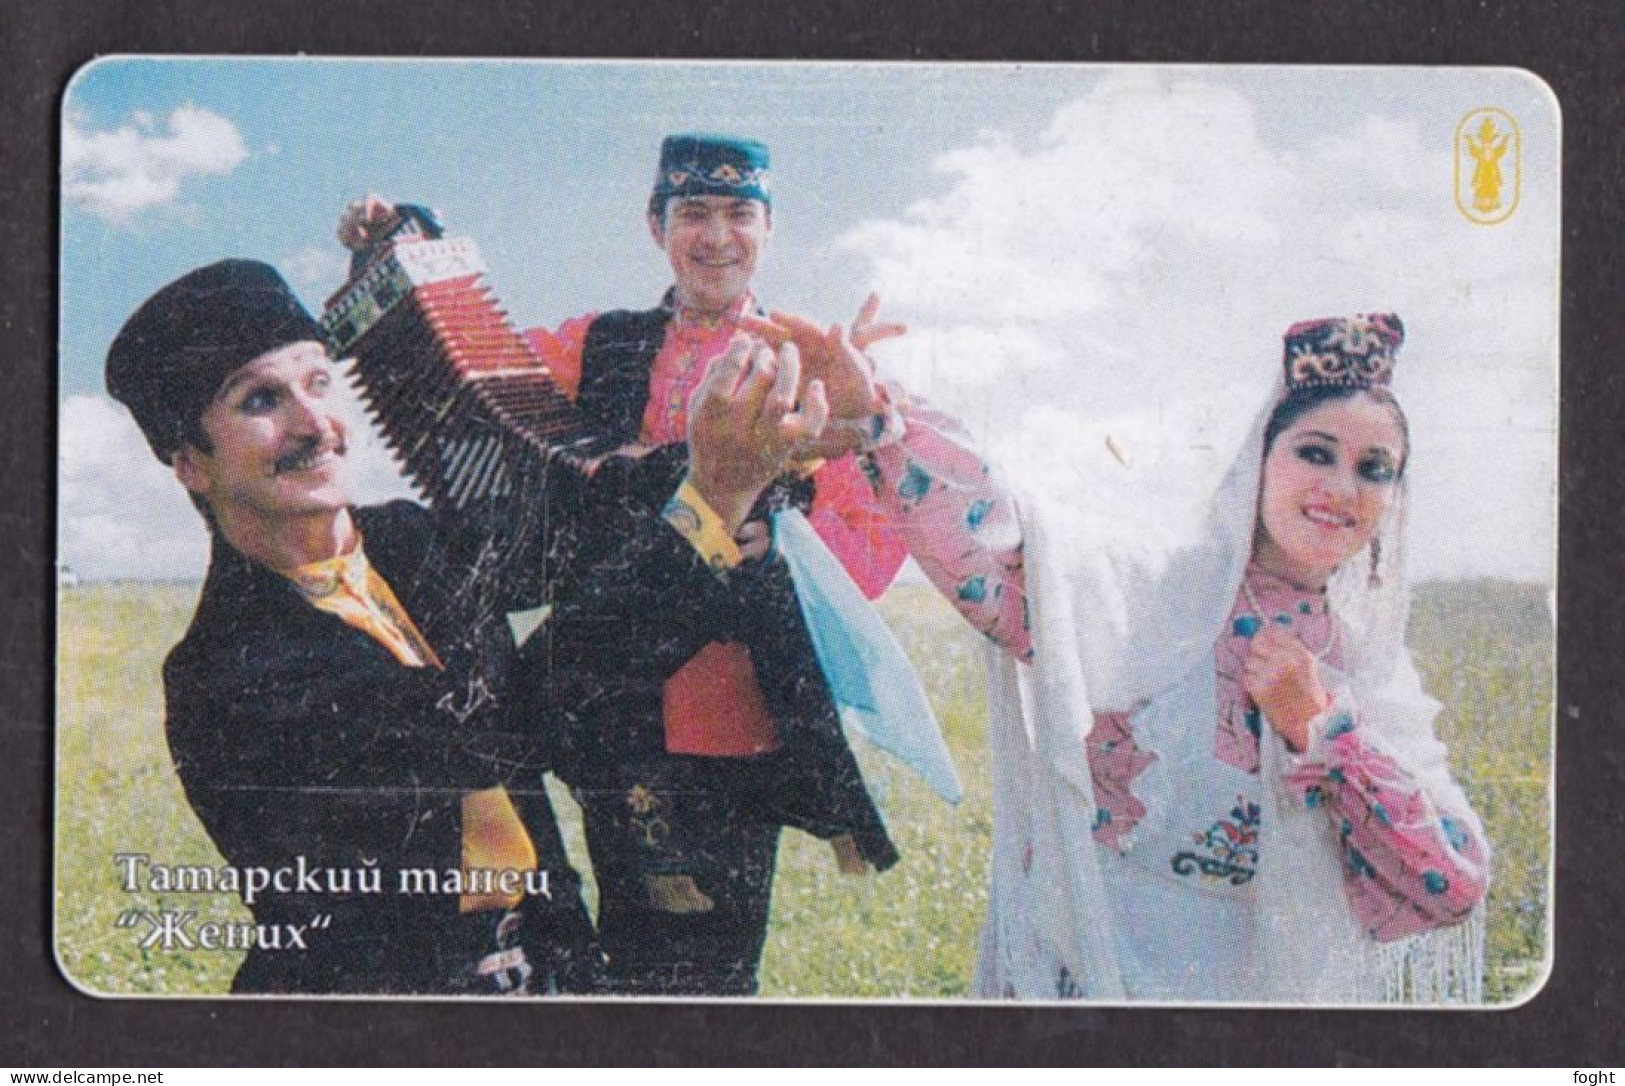 2002 Russia Bashinformsvyaz-Ufa,Tatar Dance "Bridegroom",90 Units Card,Col:RU-BIS-V-006 - Russland